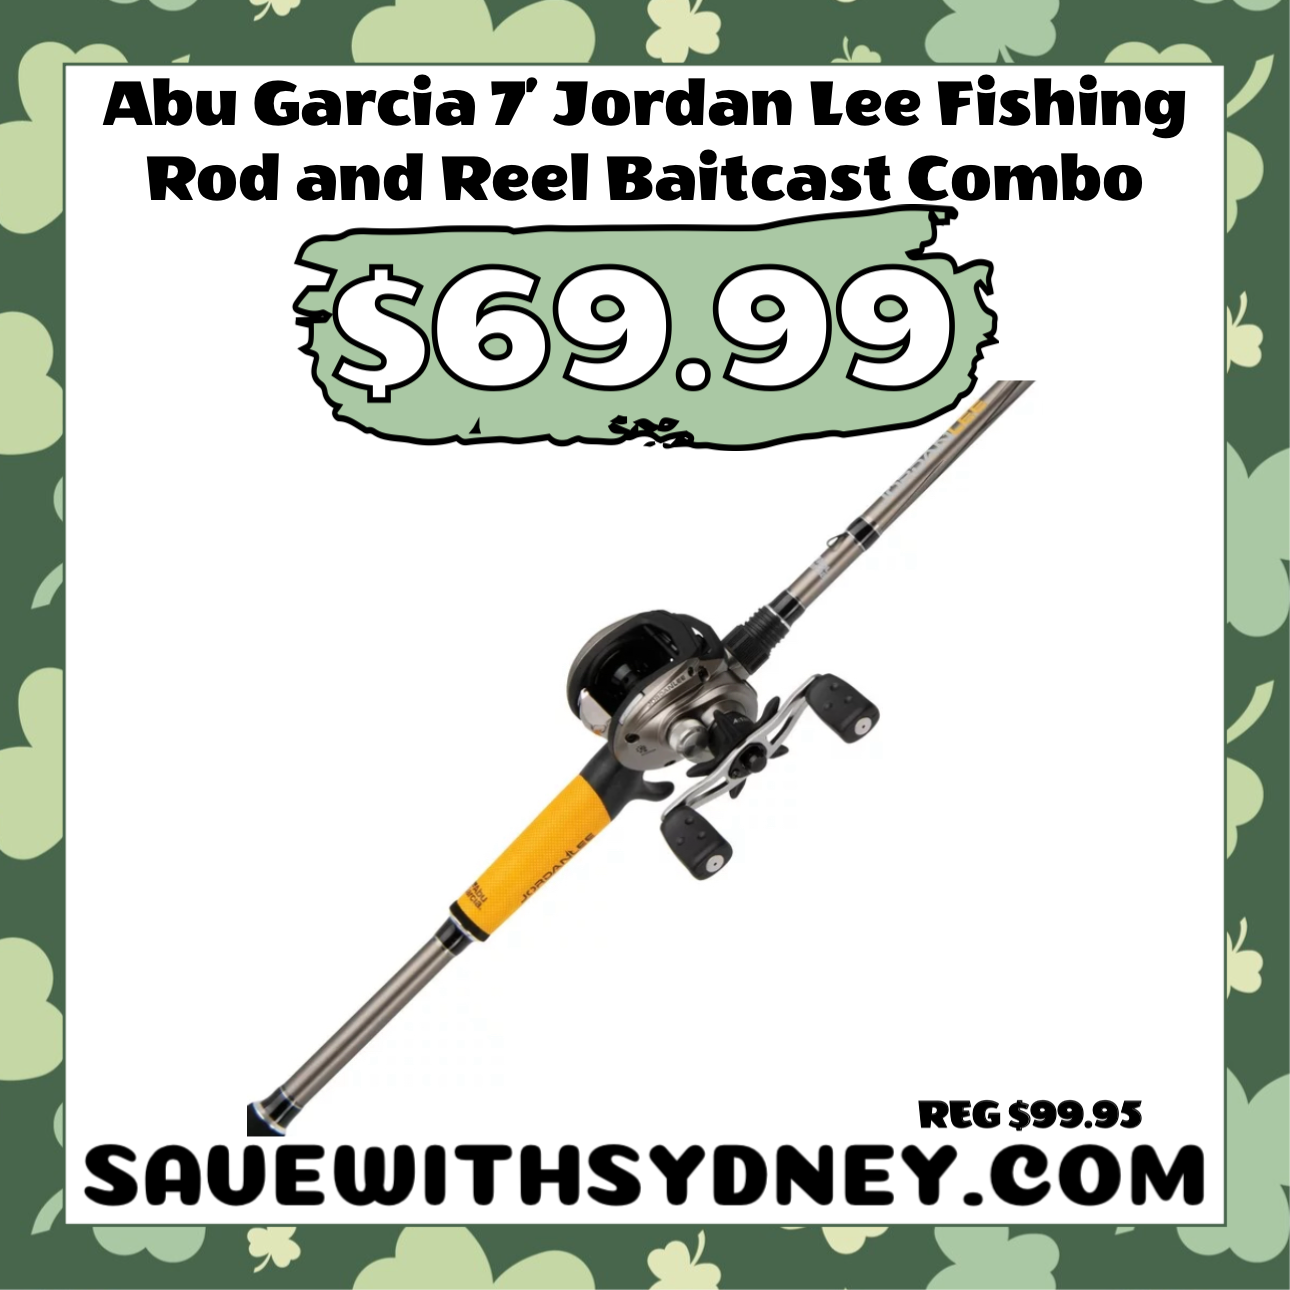 Abu Garcia 7' Jordan Lee Fishing Rod and Reel Baitcast Combo